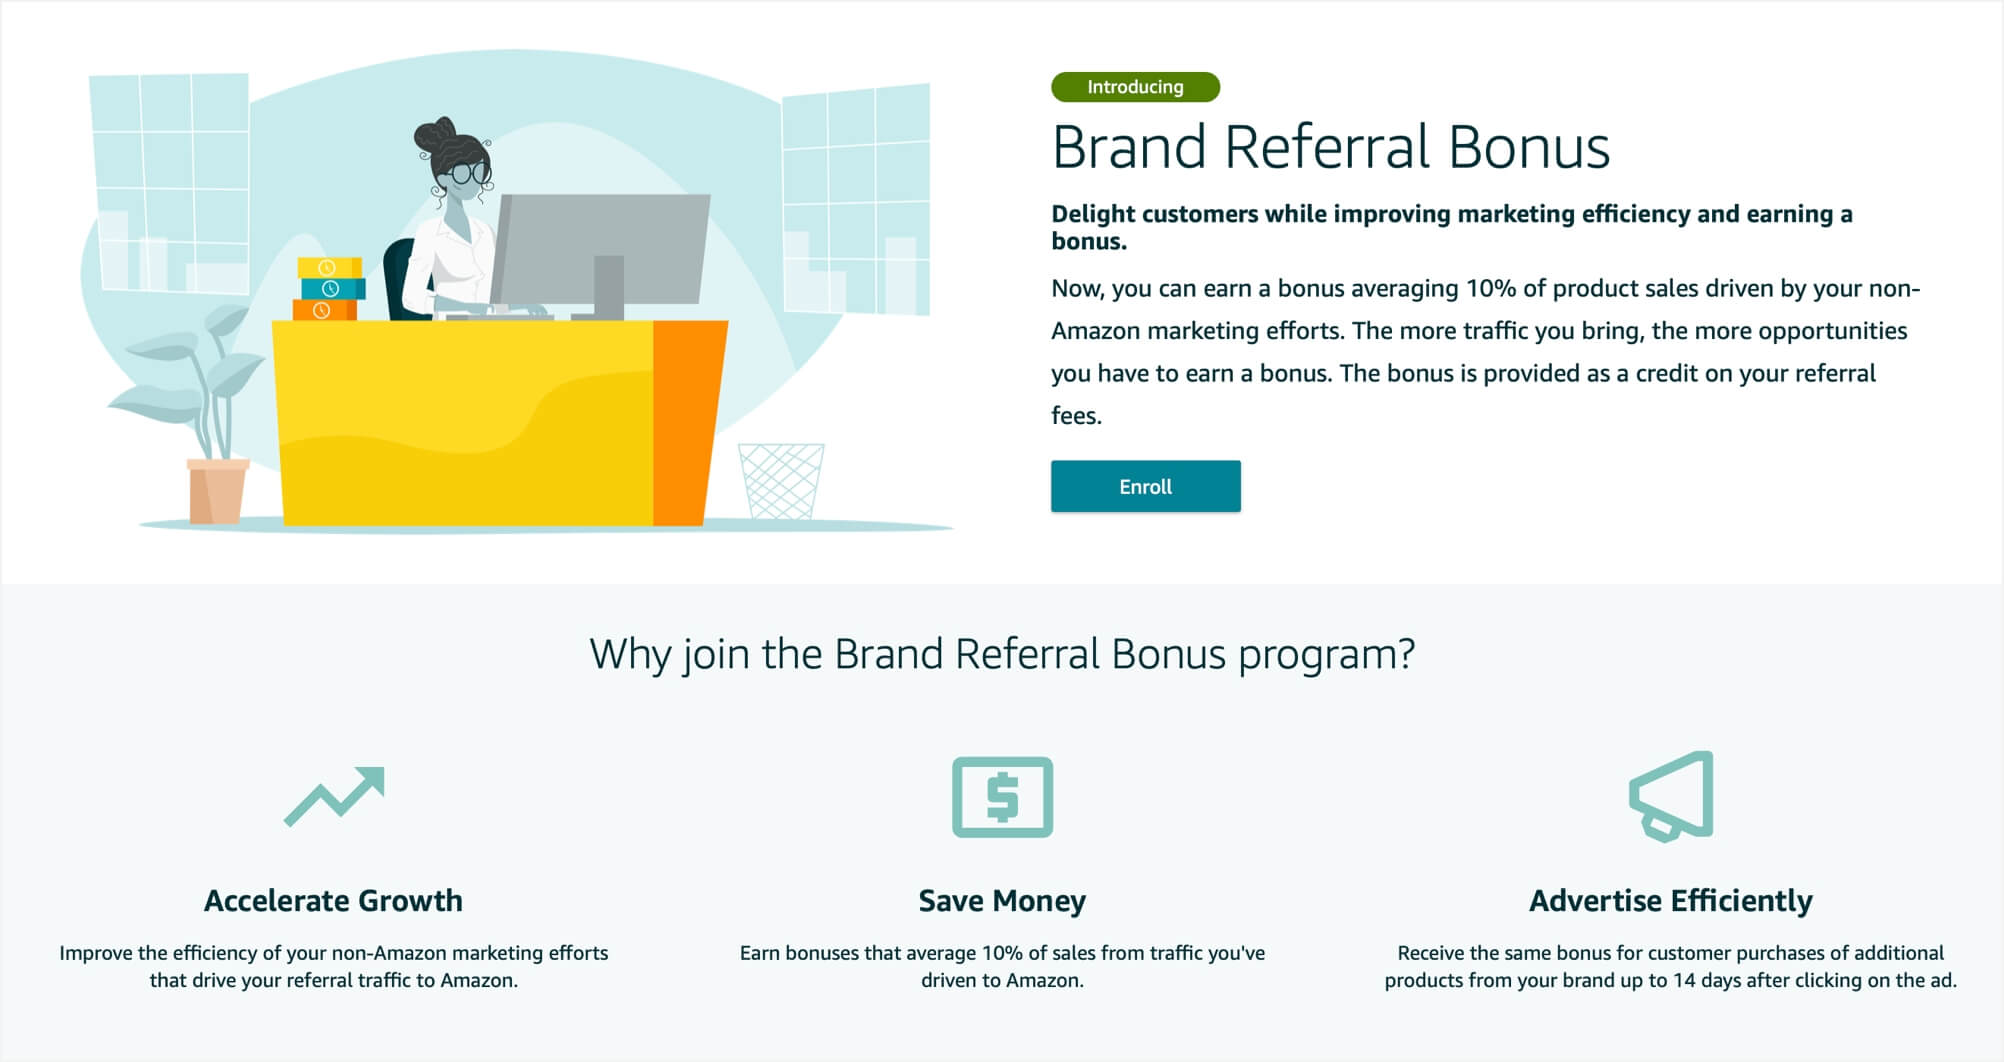 Amazon Brand Referral Bonus program